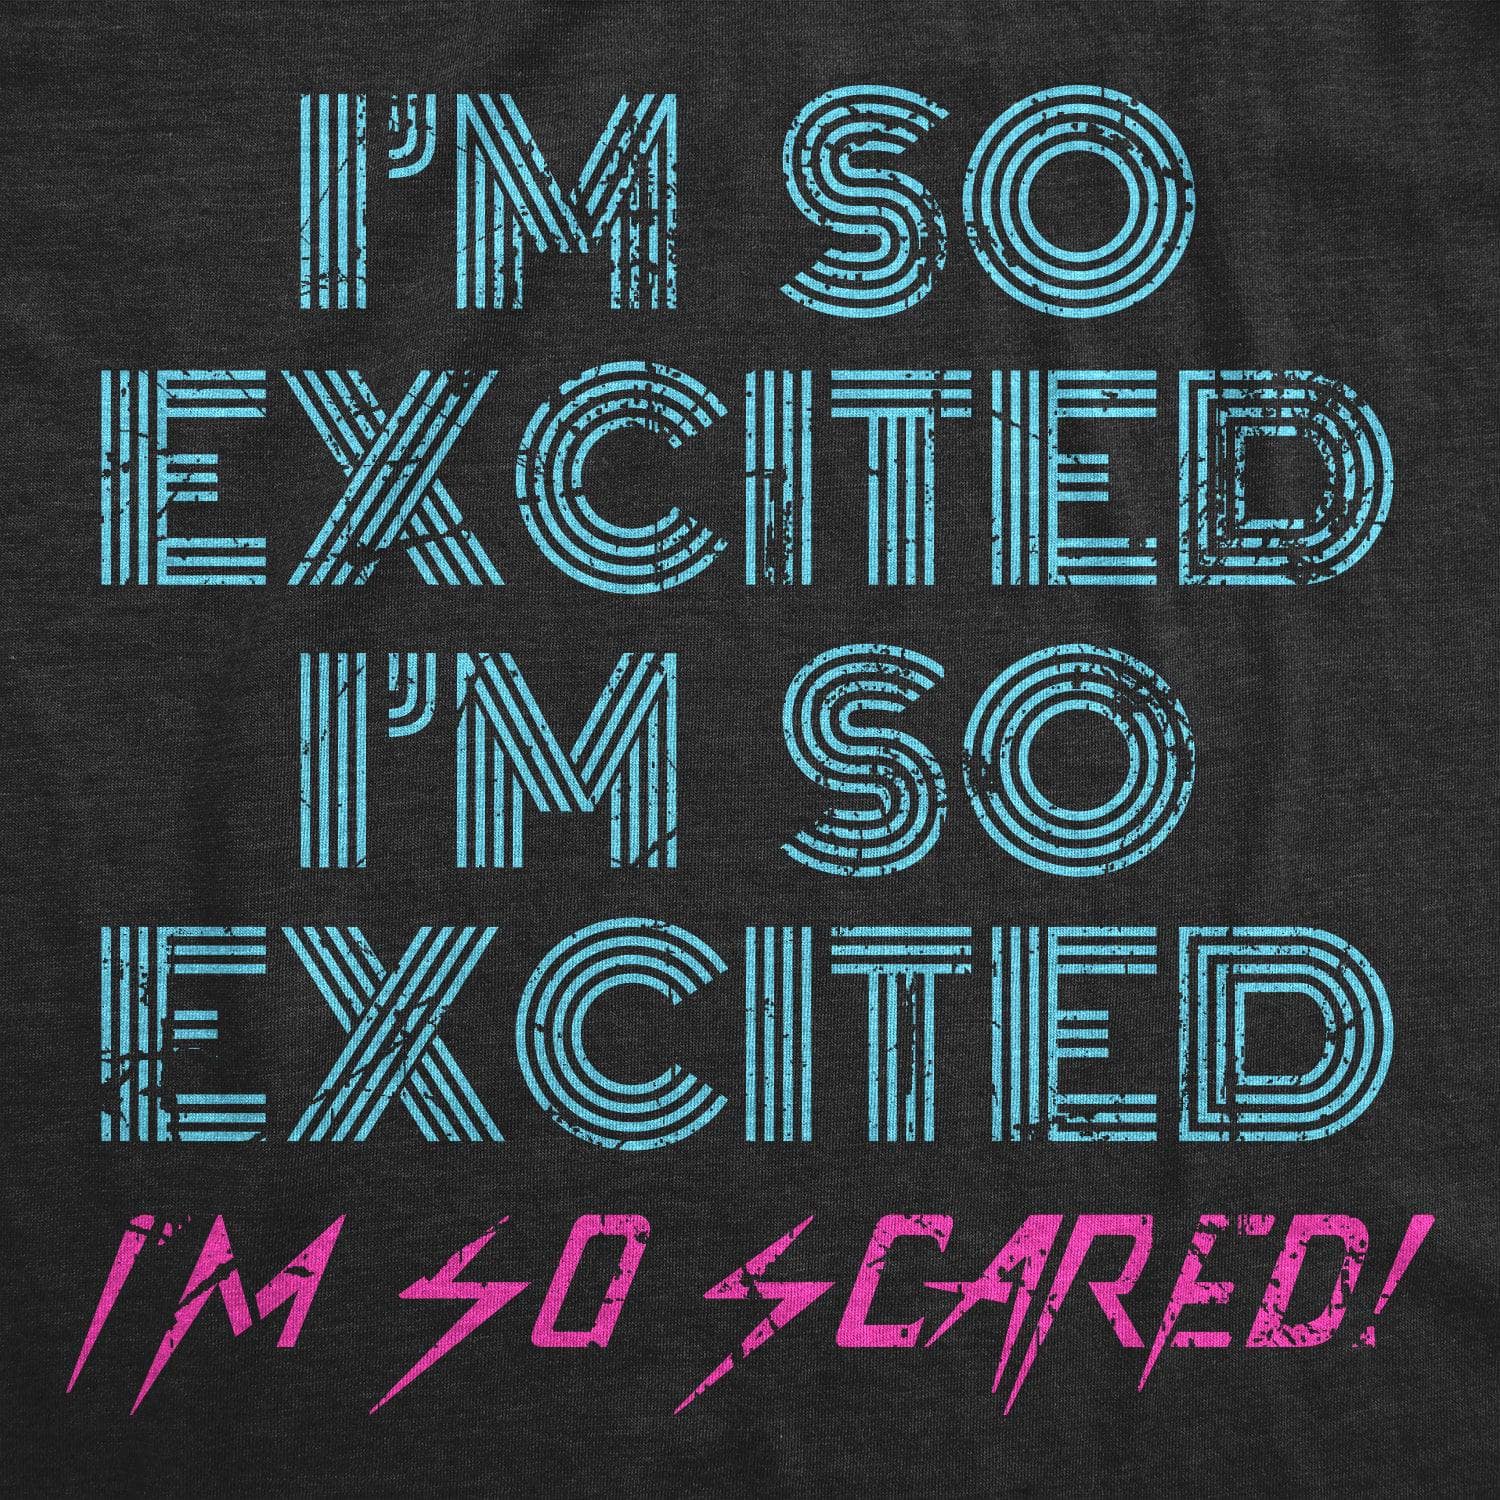 I'm So Excited I'm So Scared Men's Tshirt  -  Crazy Dog T-Shirts